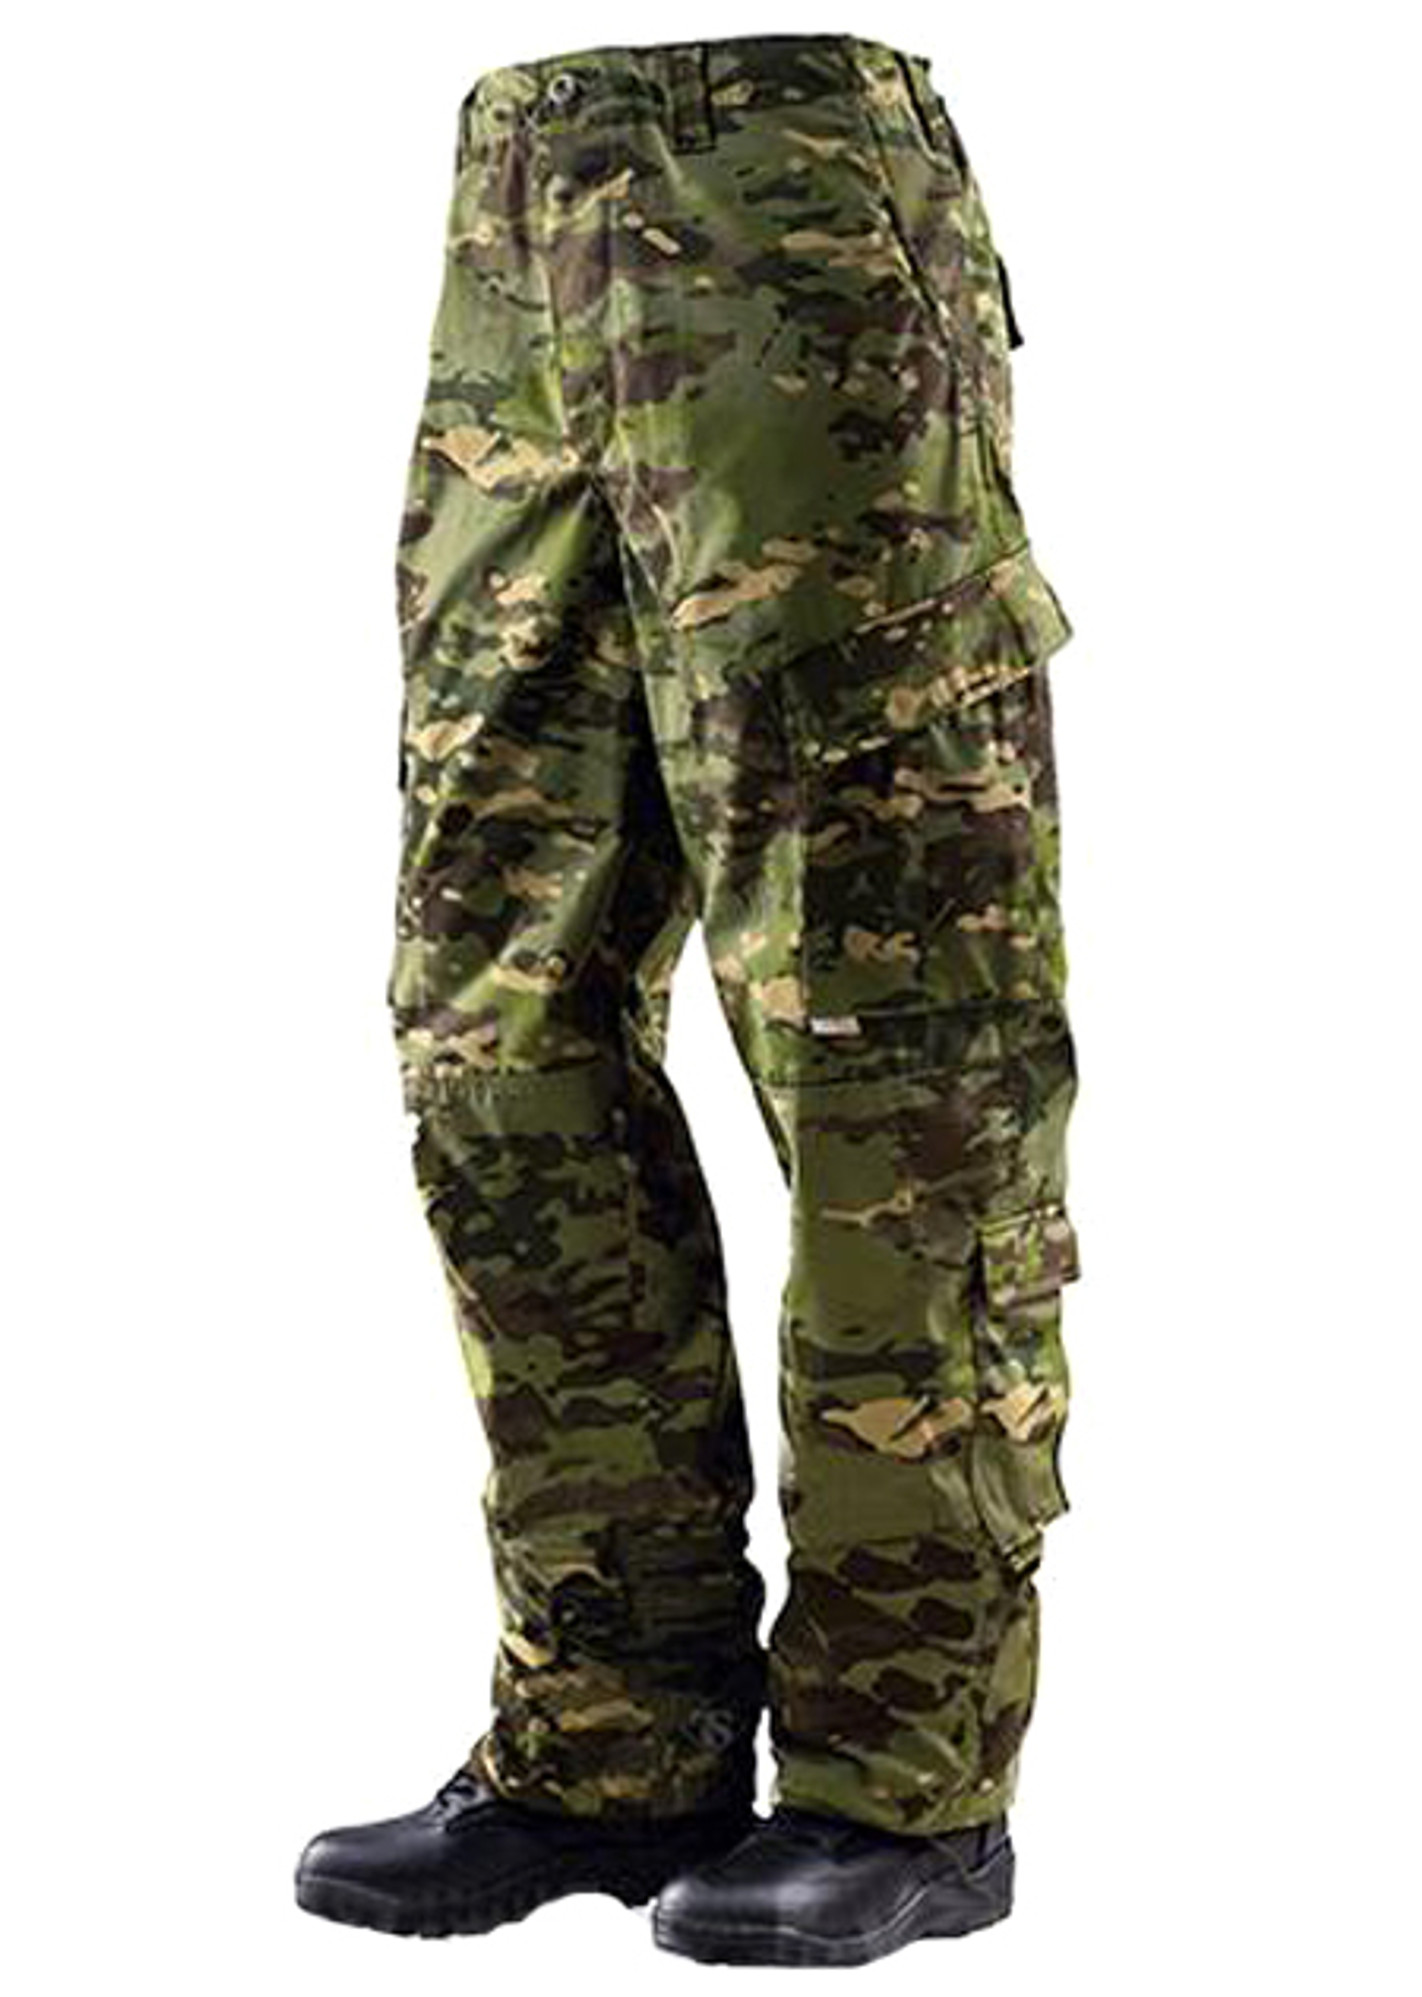 Tru-Spec Tactical Response Uniform Pants (Color: Multicam Tropic)